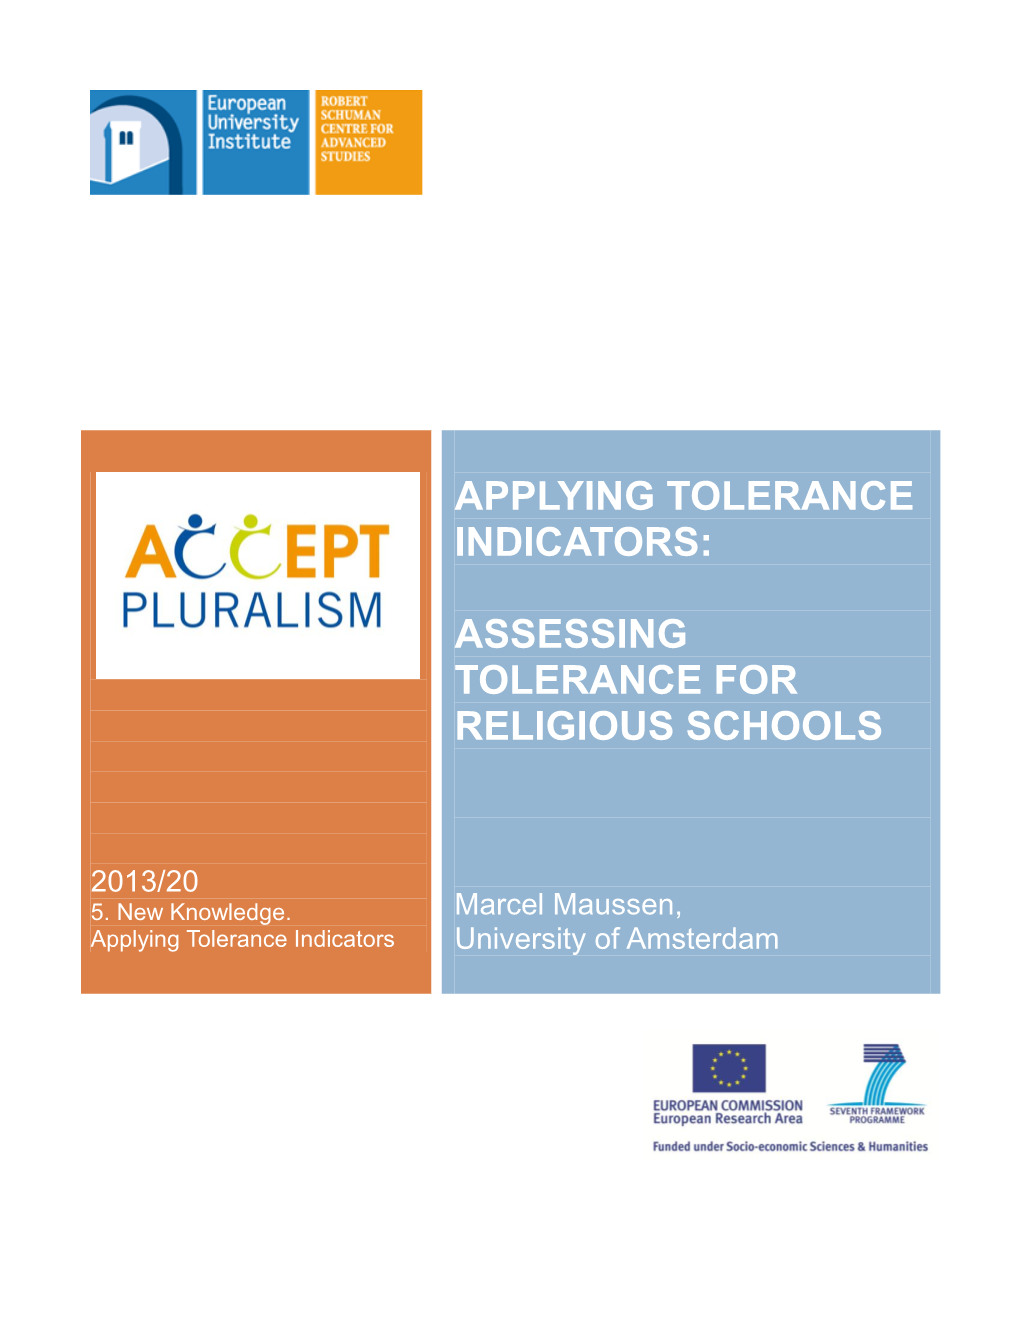 Assessing Tolerance for Religious Schools